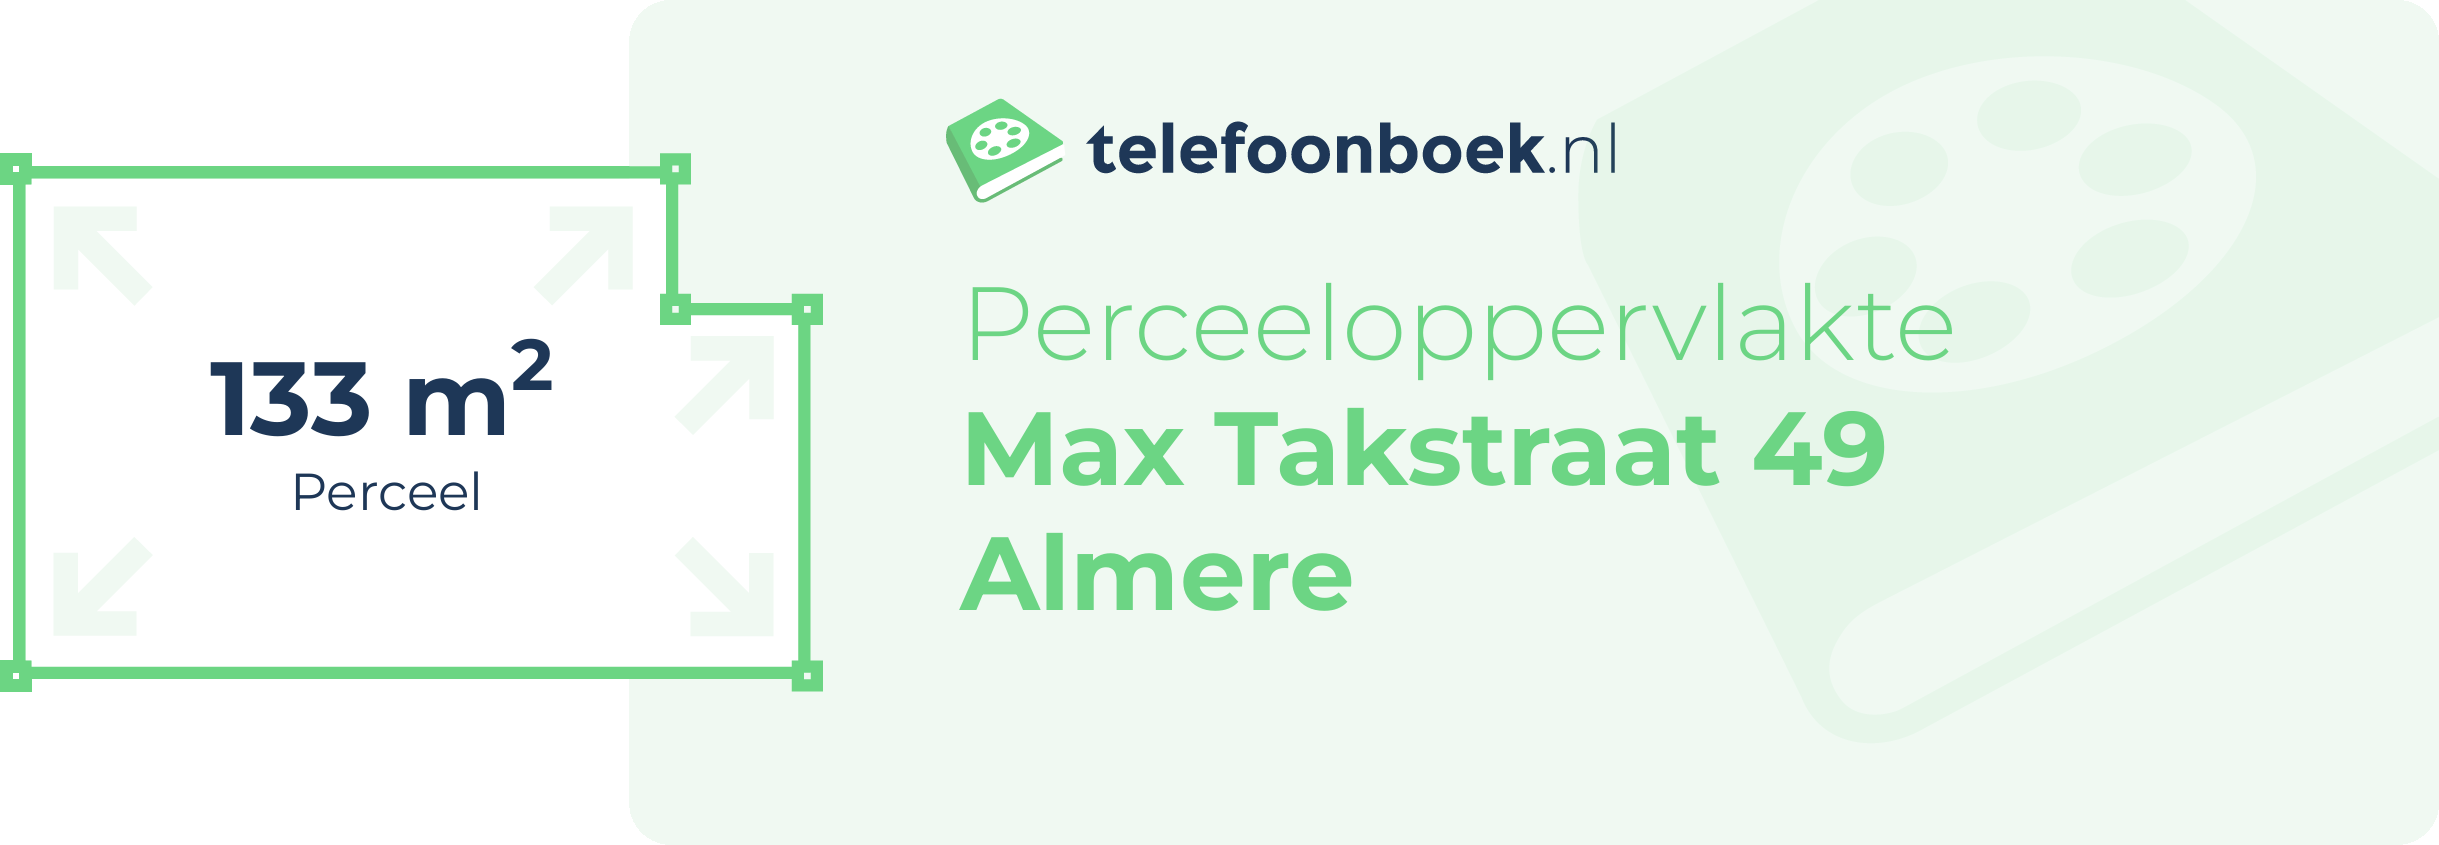 Perceeloppervlakte Max Takstraat 49 Almere